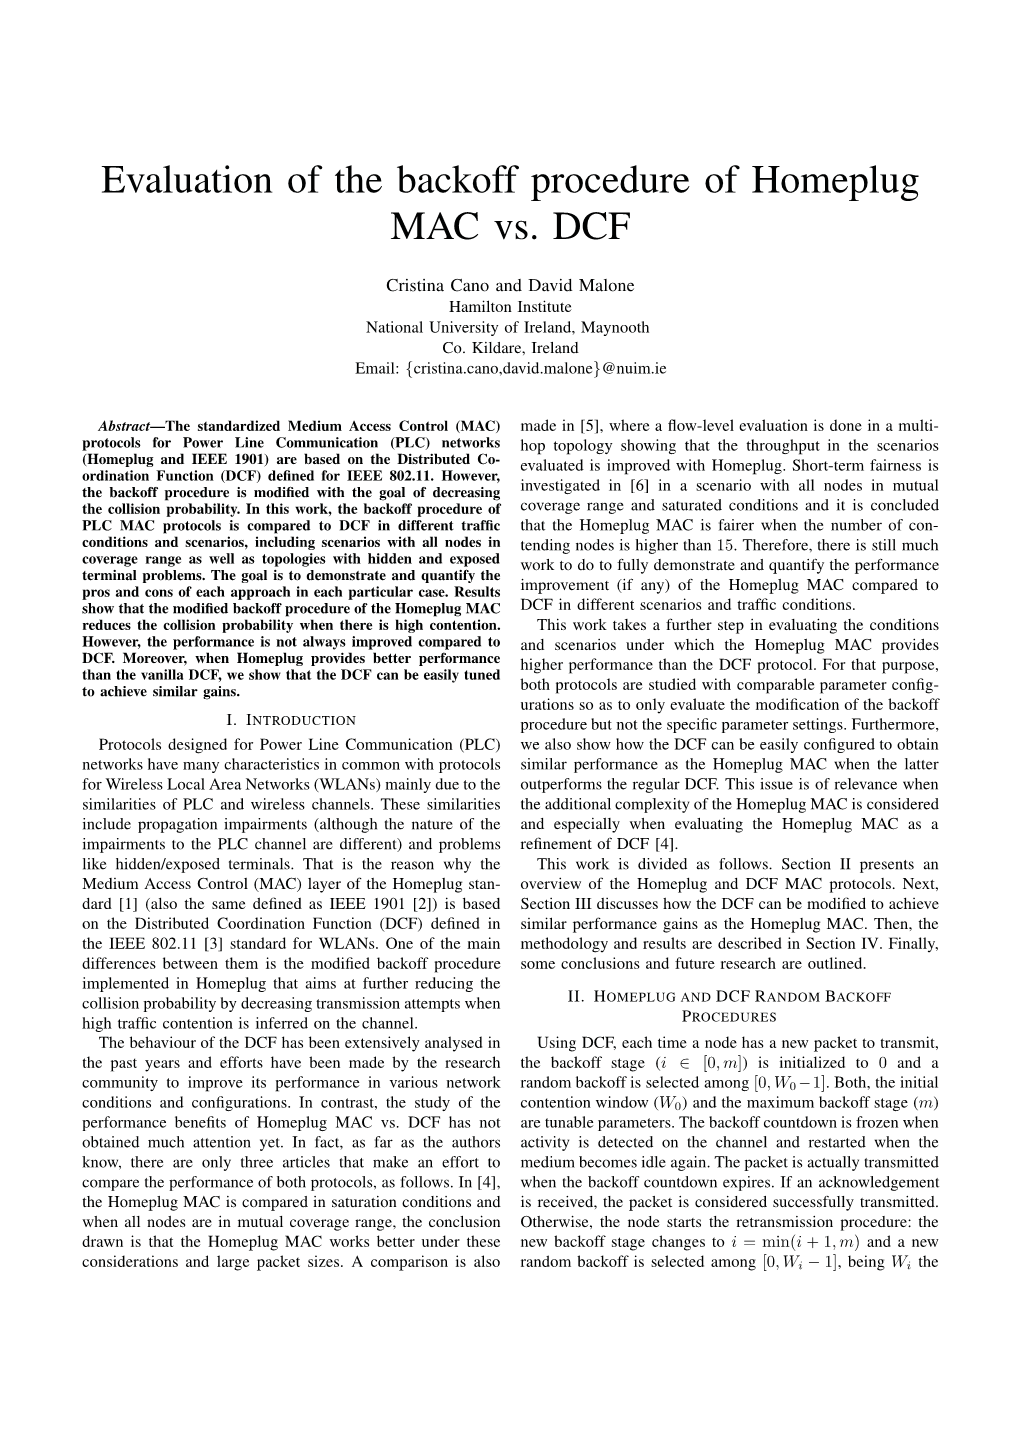 Evaluation of the Backoff Procedure of Homeplug MAC Vs. DCF